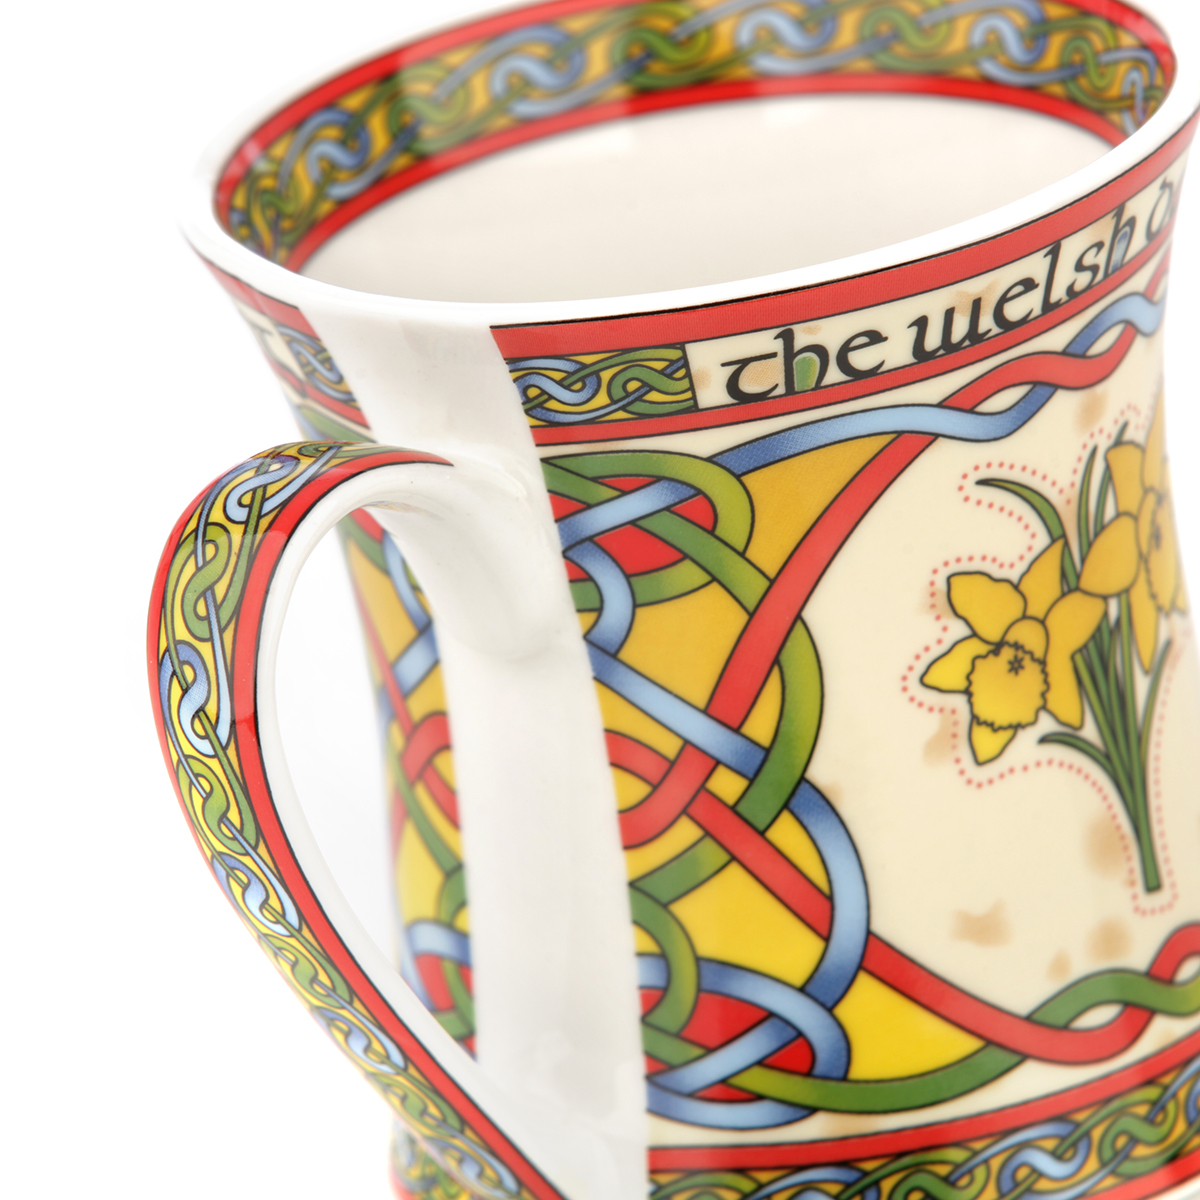 The Welsh Daffodil Mug - Kaffeebecher mit walisischer Narzisse & keltischen Ornamenten